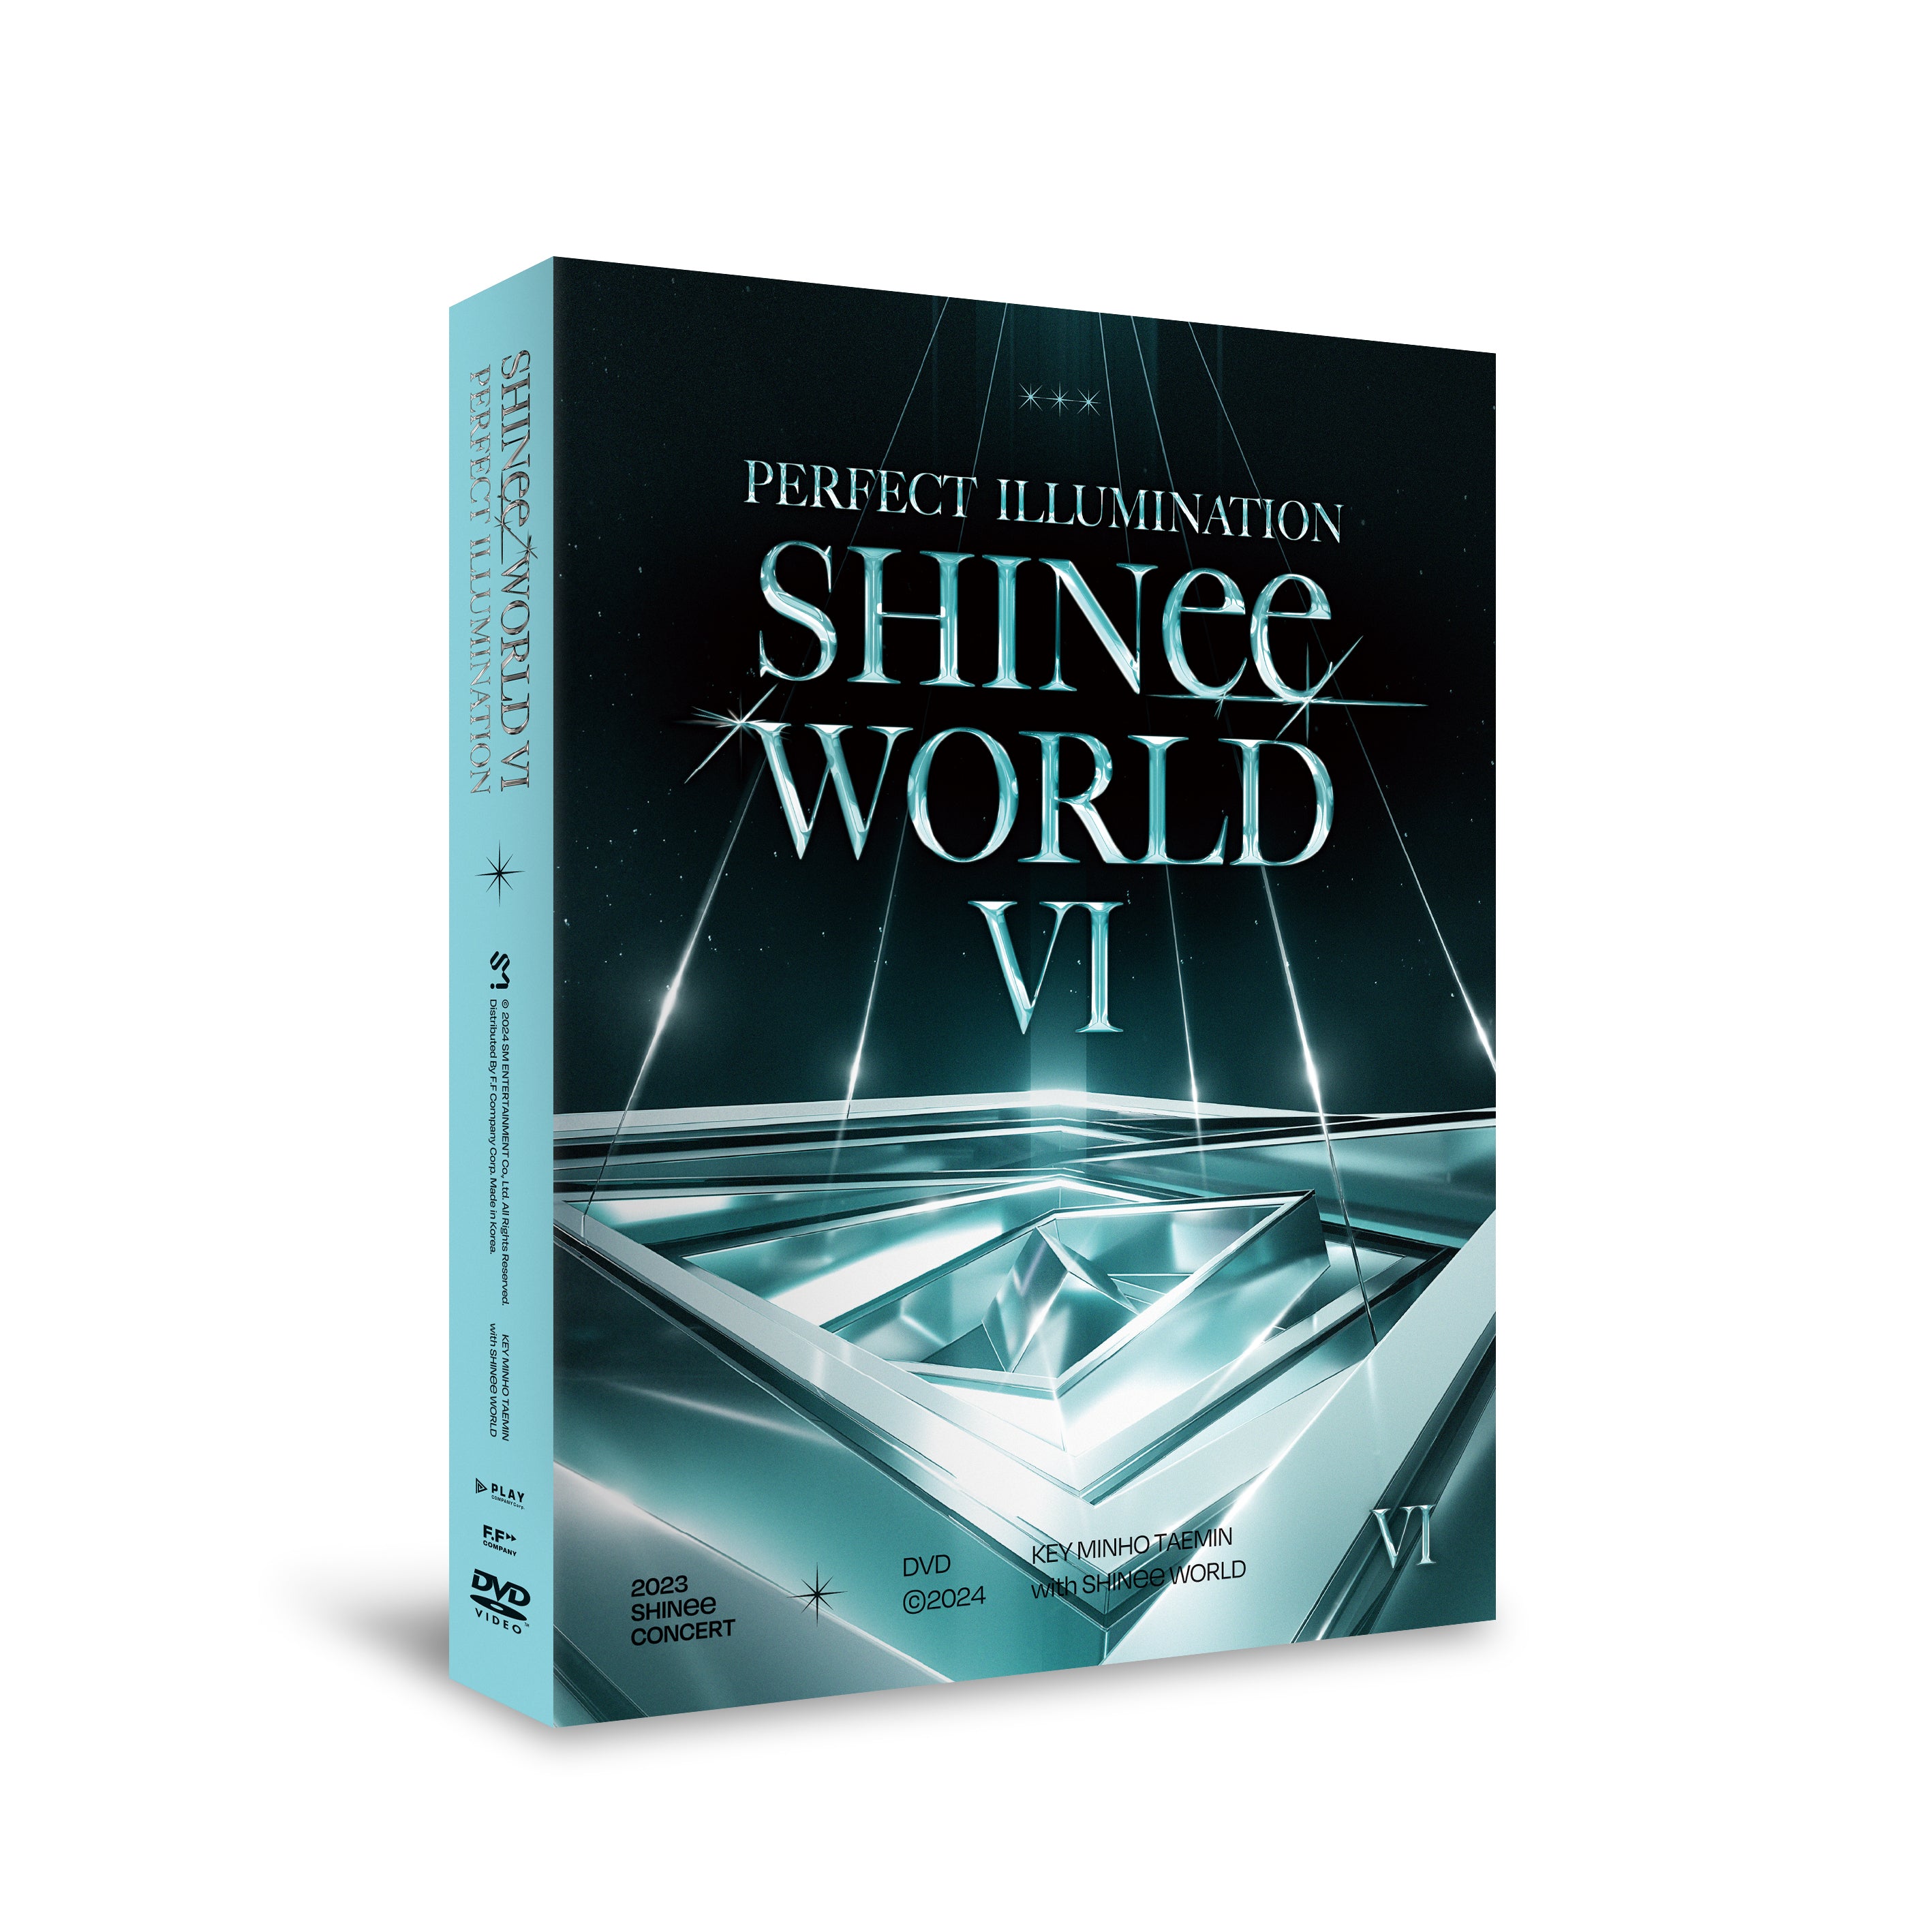 SHINee - SHINee WORLD VI [PERFECT ILLUMINATION] in SEOUL DVD Tour DVD - Baro7